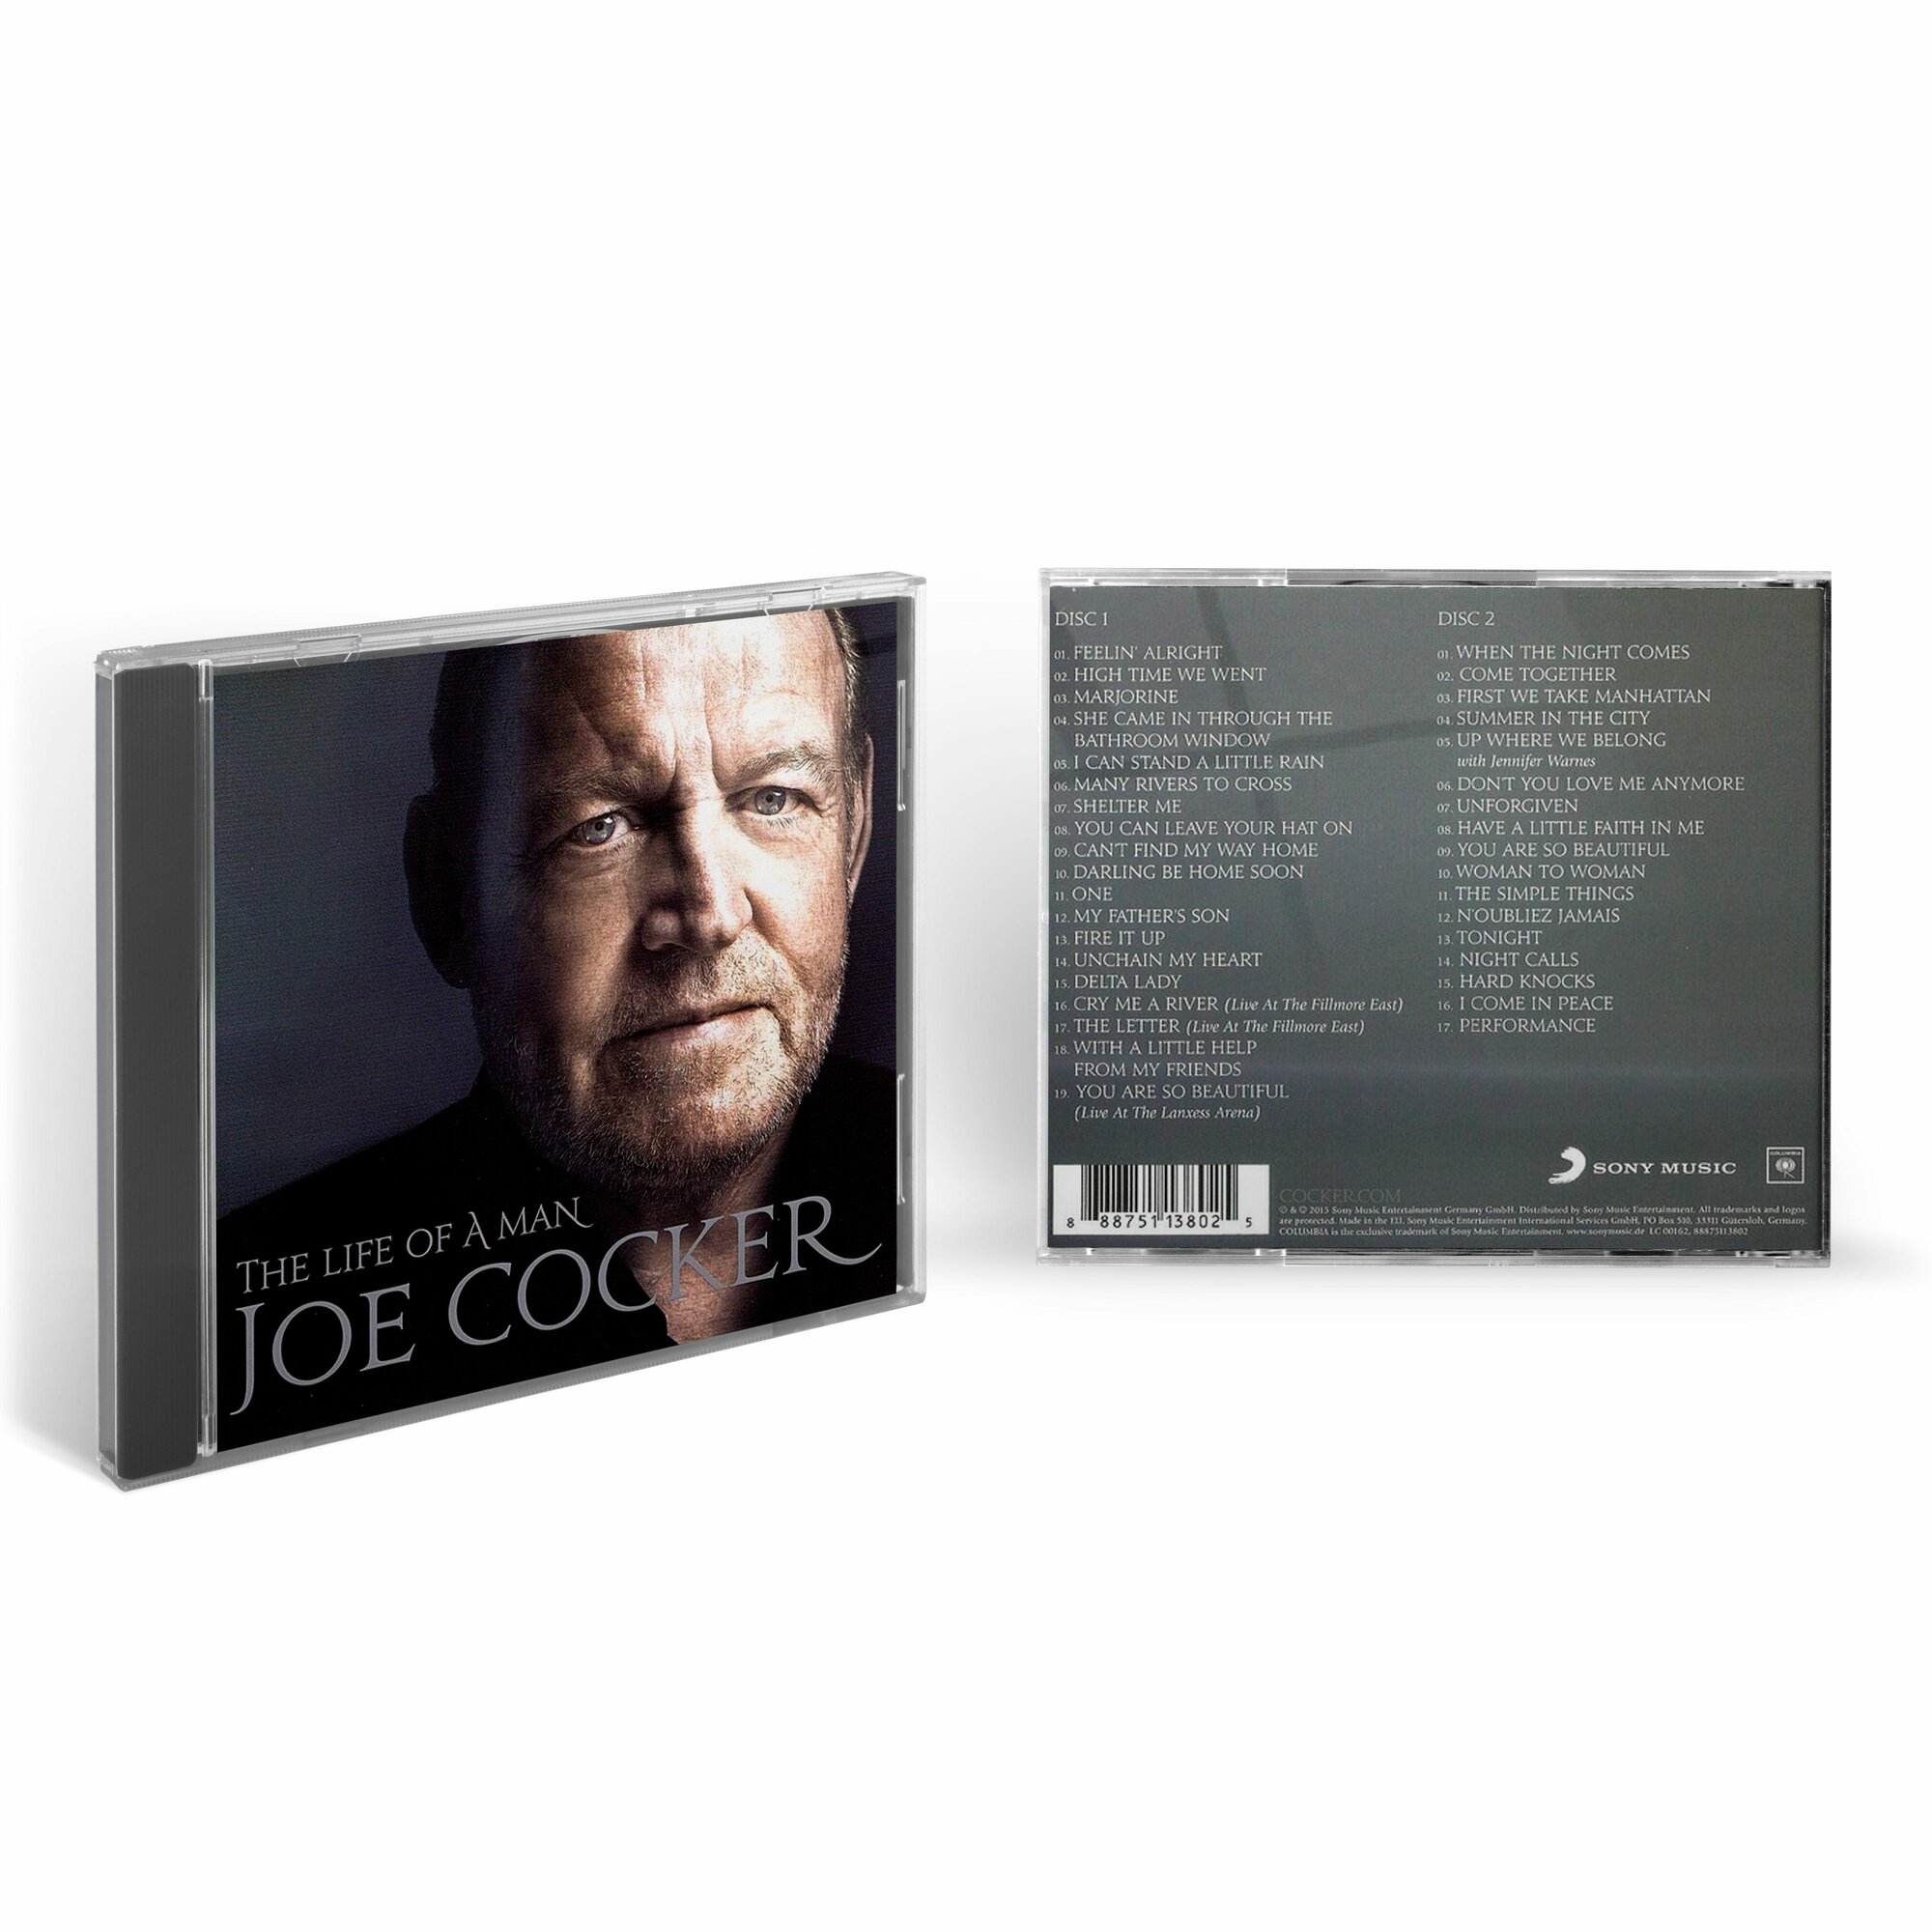 Joe Cocker - The Life Of A Man: The Ultimate Hits 1968 - 2013 (2CD) 2015 Columbia Jewel Аудио диск